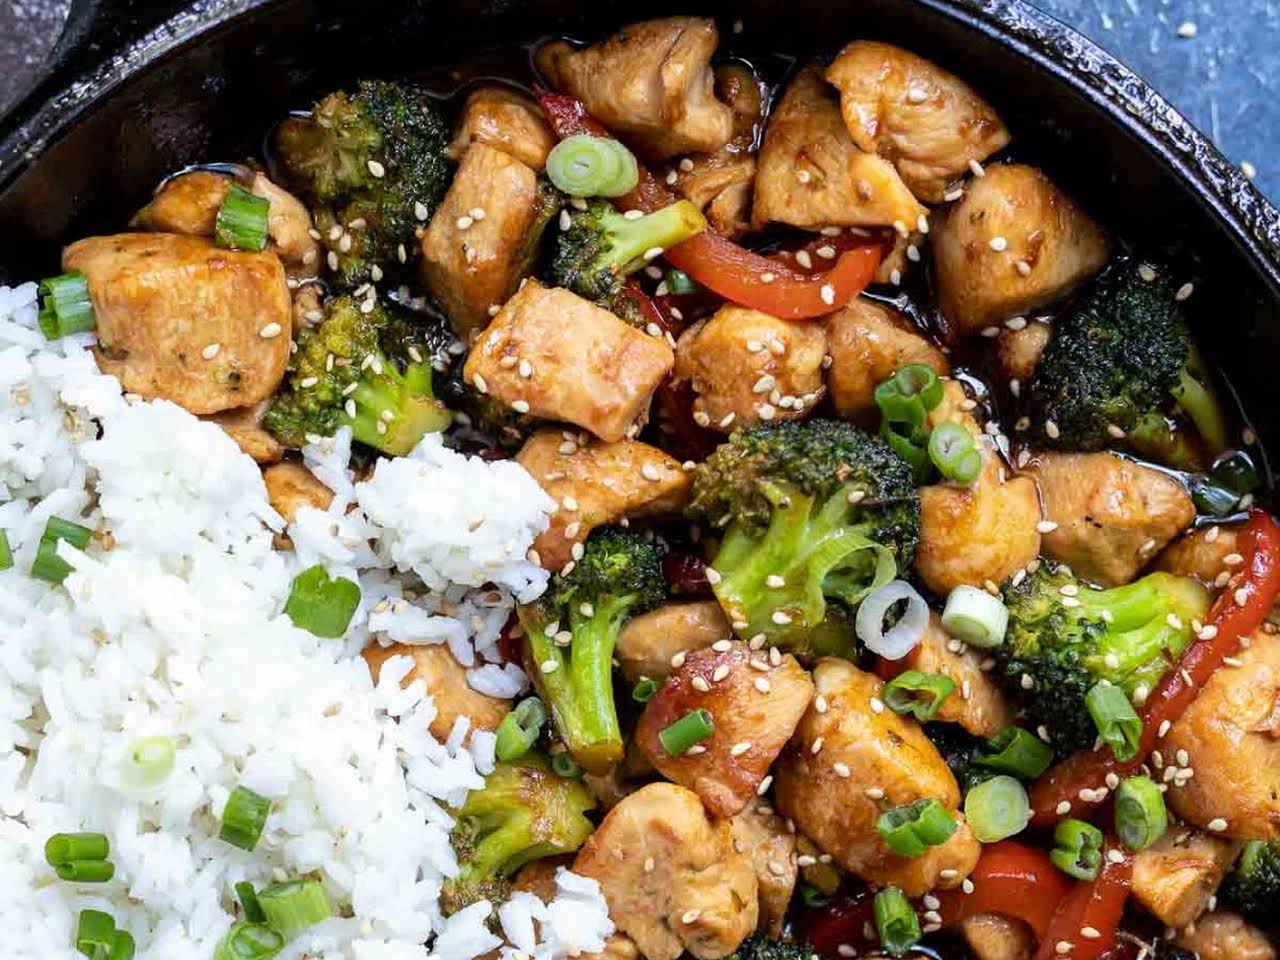 Chicken and Broccoli Stir Fry Meal Prep - Kirbie's Cravings